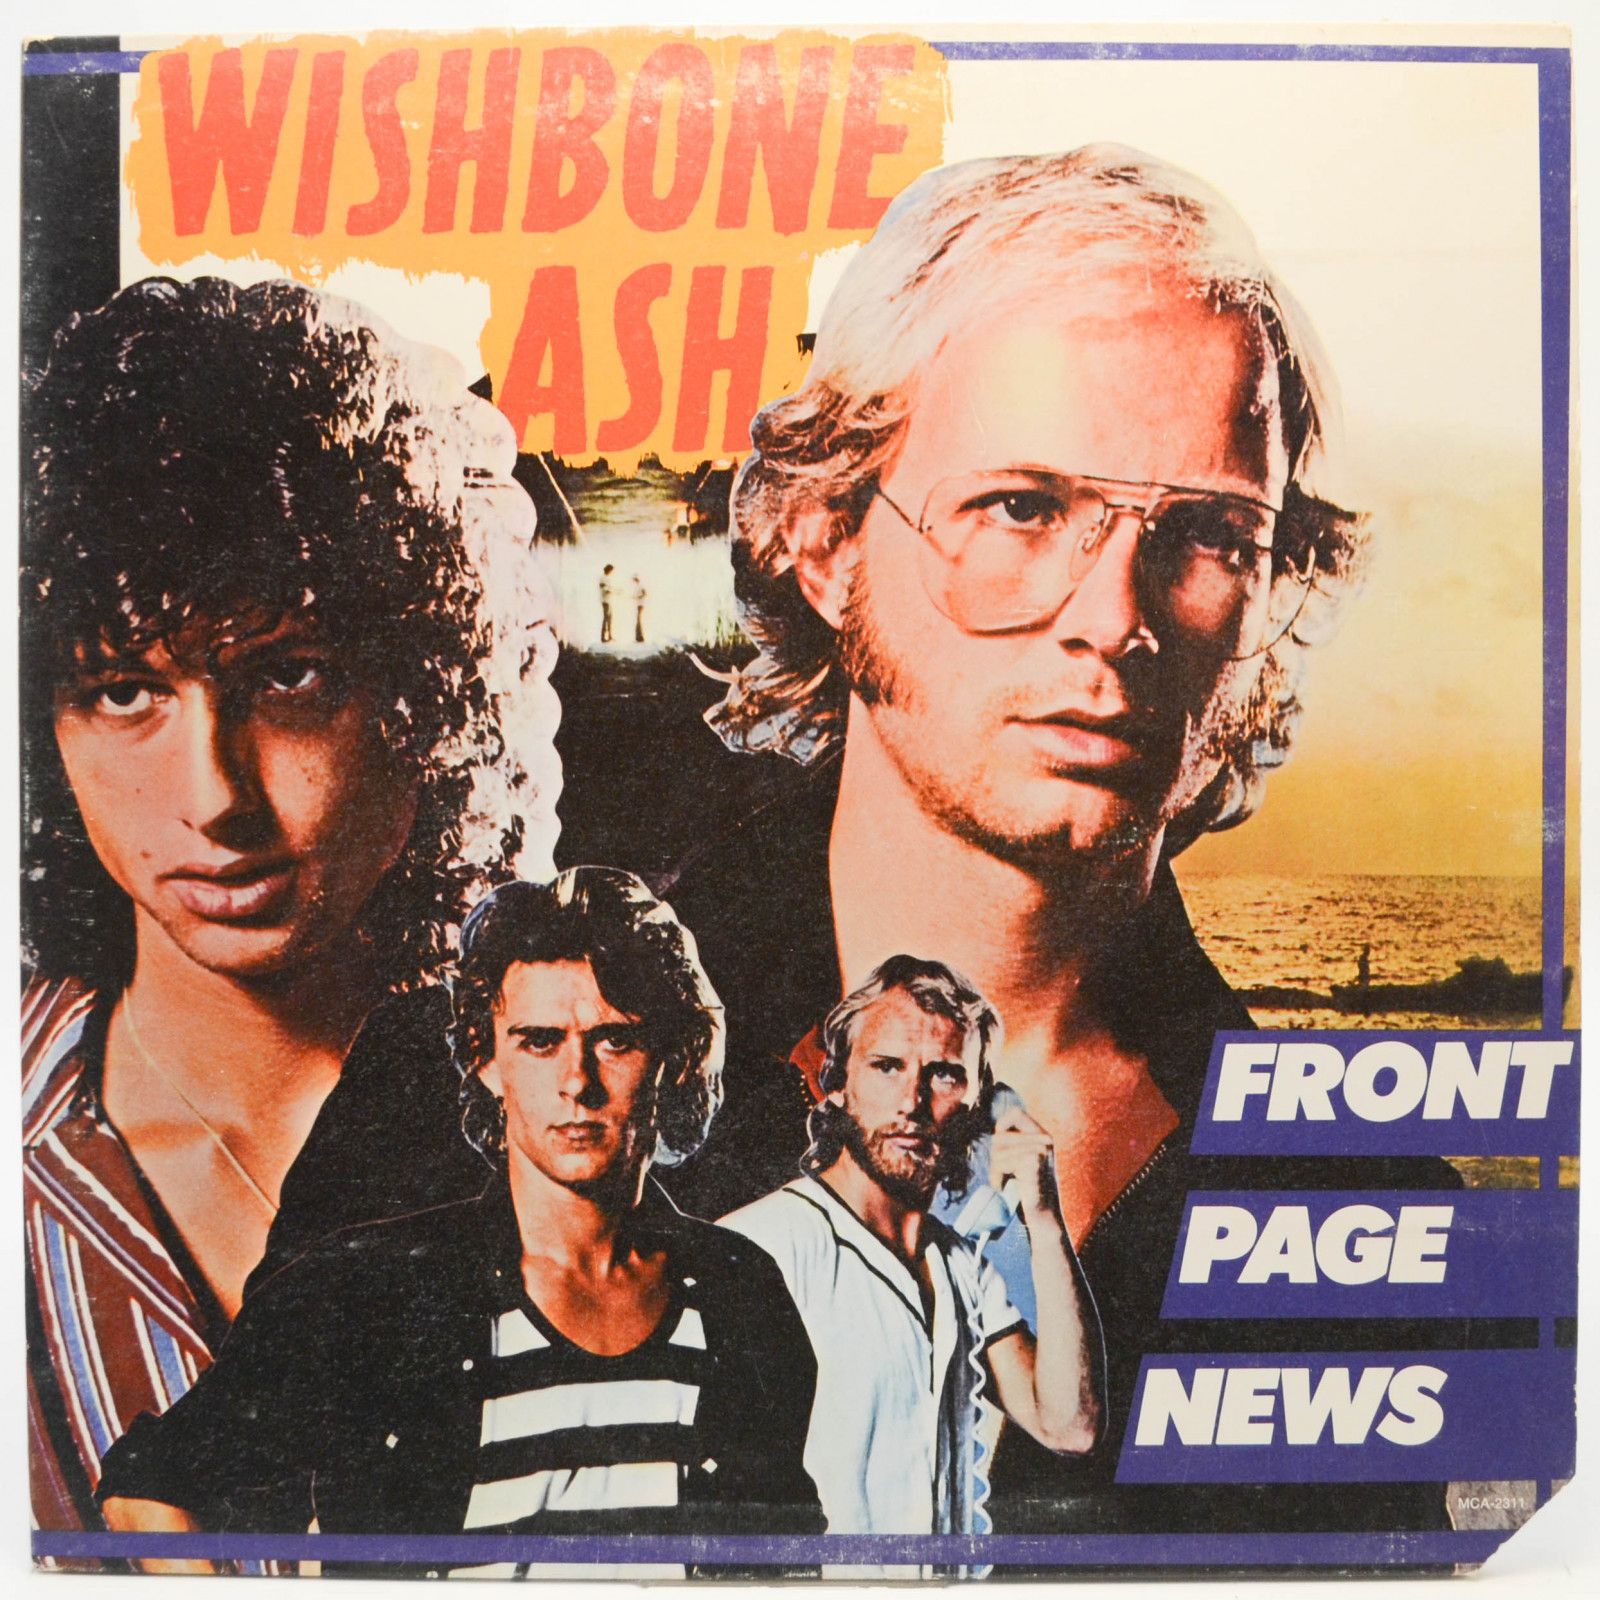 Wishbone Ash — Front Page News (USA), 1977